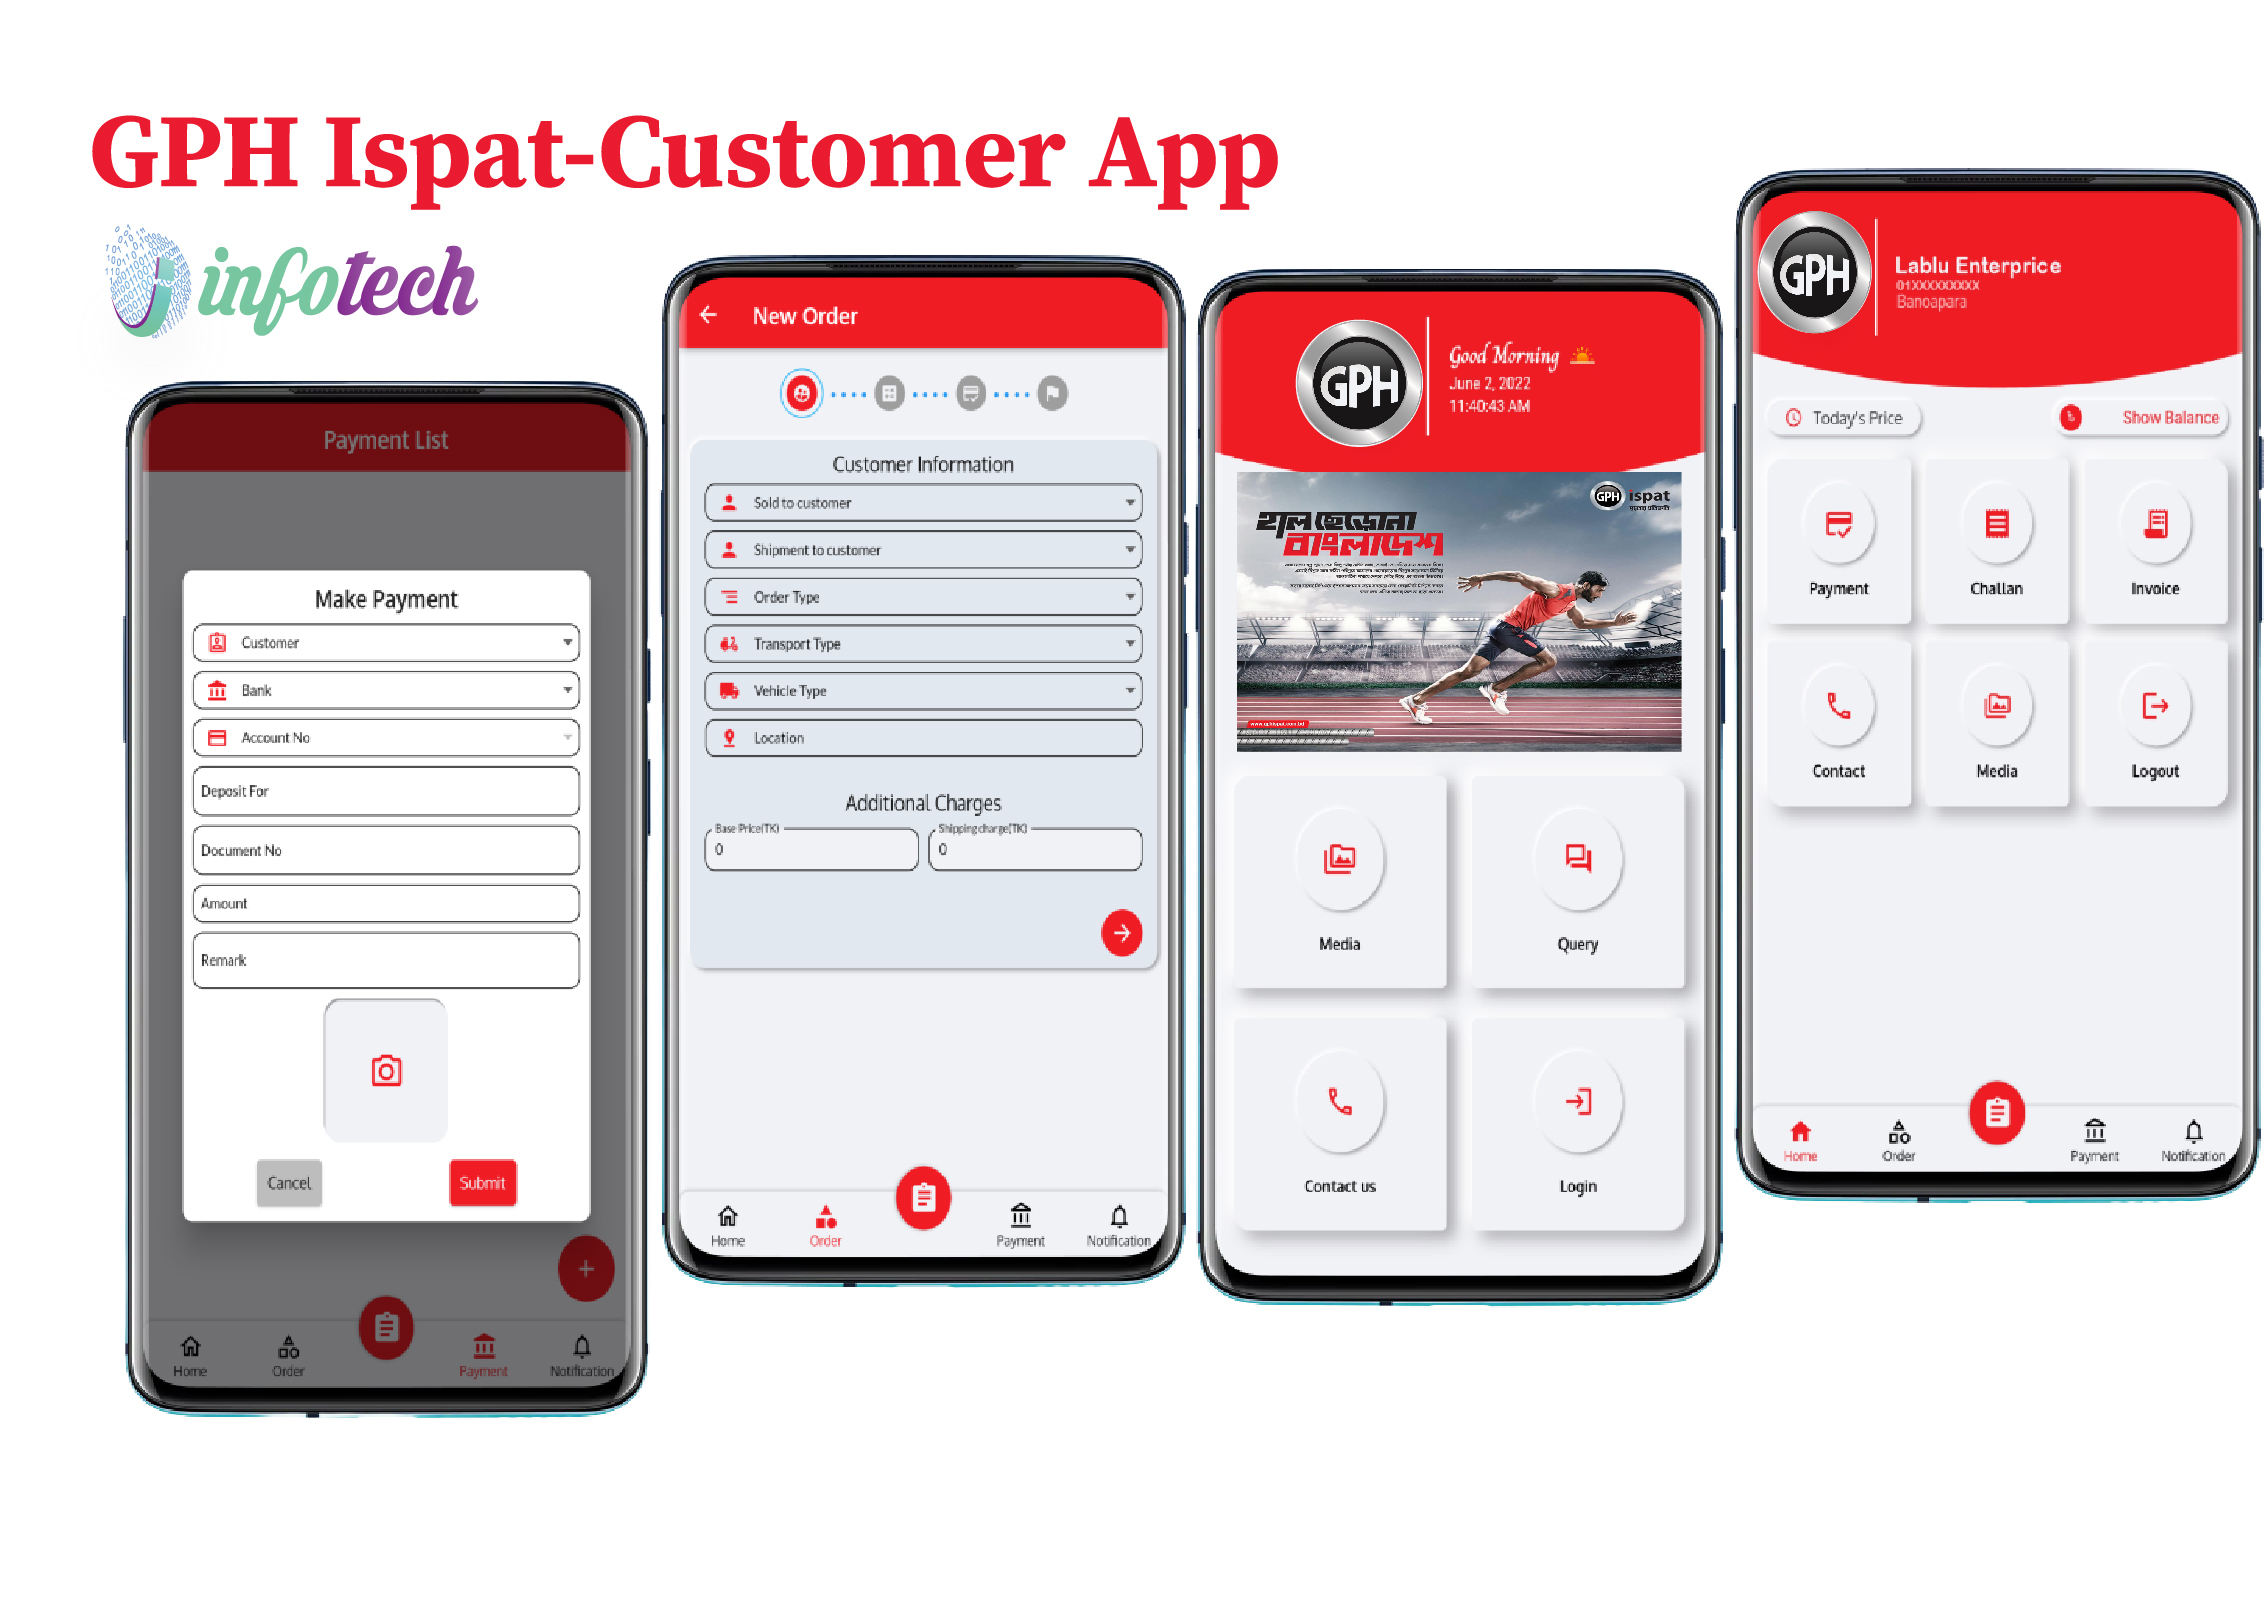 GPH Ispat-Customer App